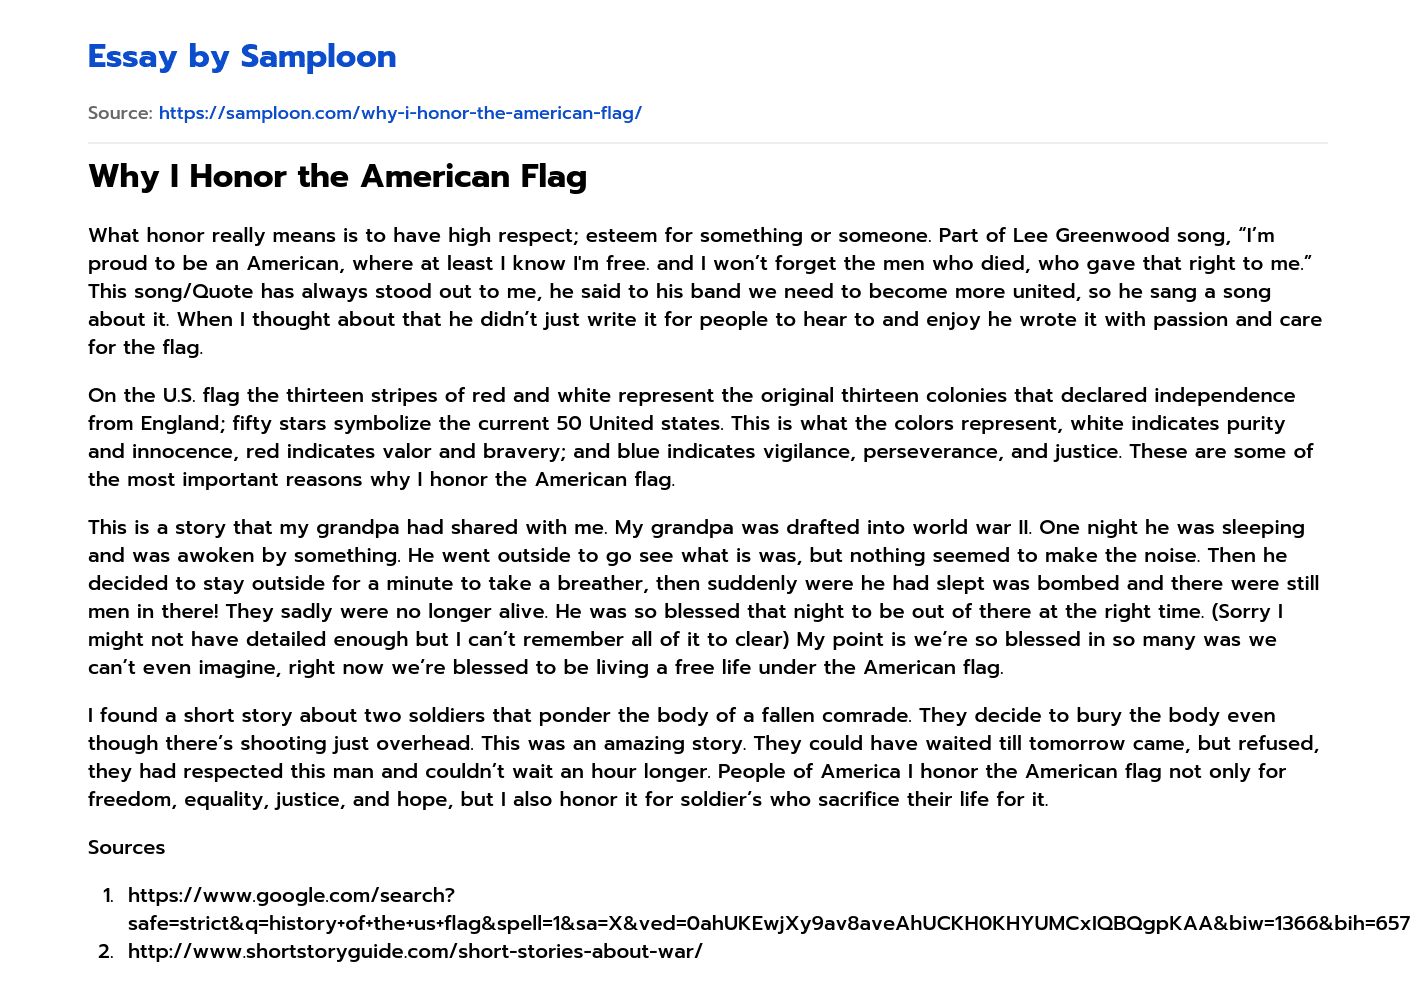 Why I Honor the American Flag essay